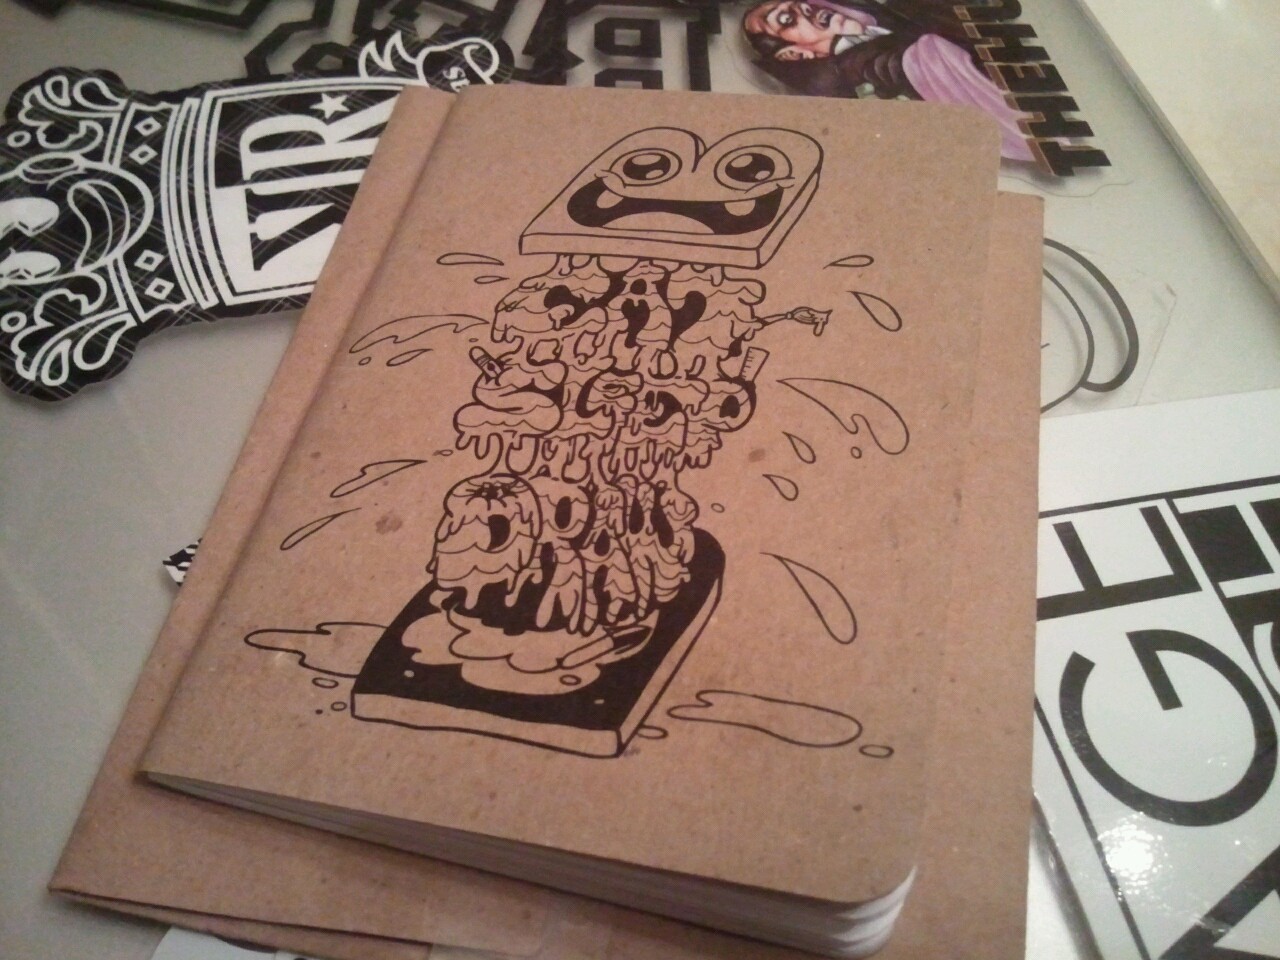 We only have 50 Limited Edition EatSleepDraw Mini pocket sketchbooks left! Get your sketchbook here. photo by defcreations